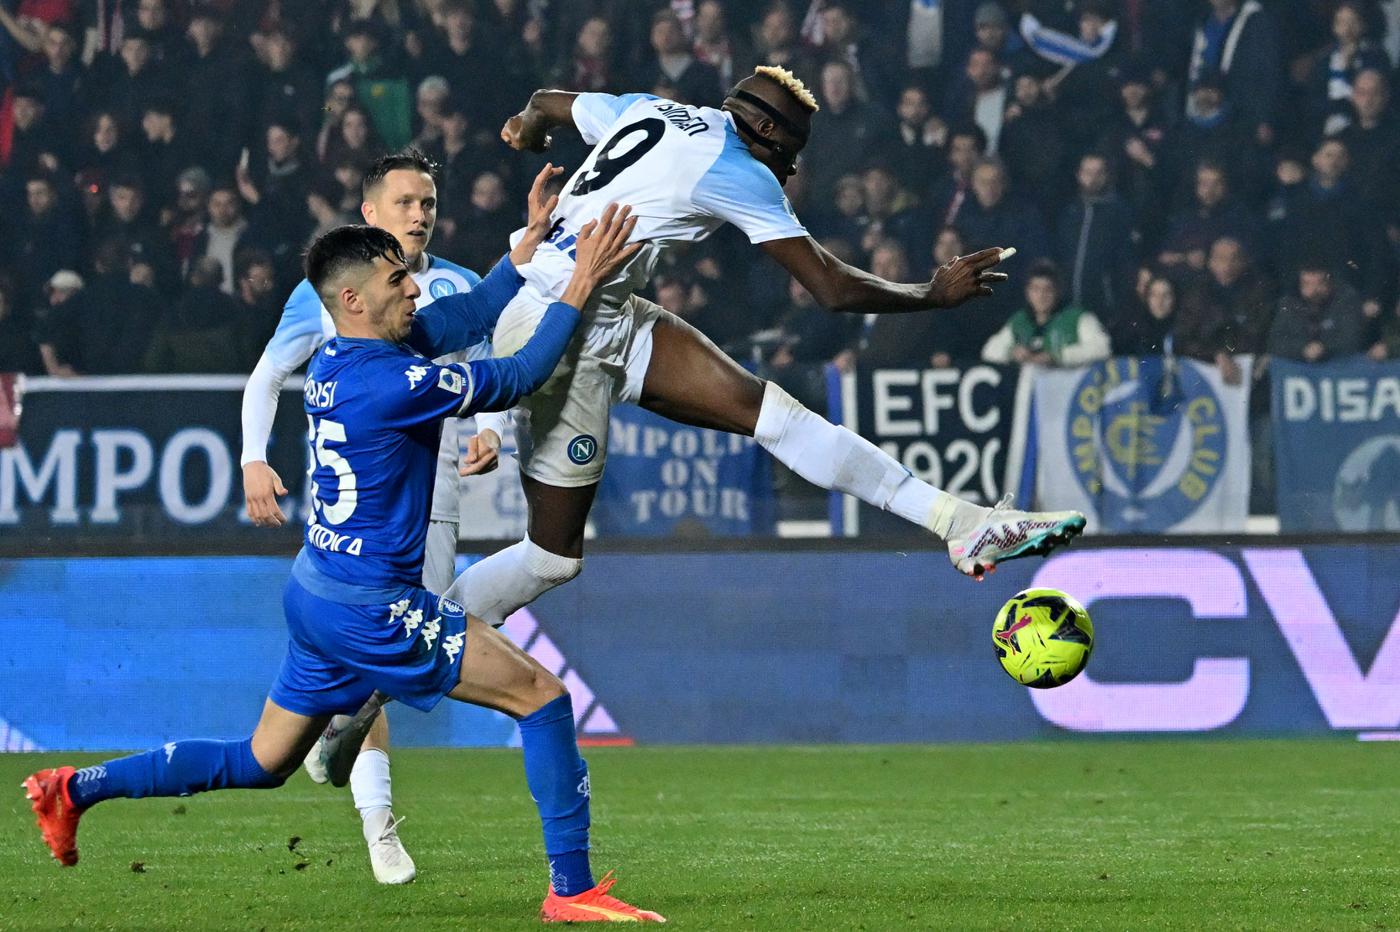 Empoli - Napoli - 0:2. Italian Championship, round 24. Match review, statistics.